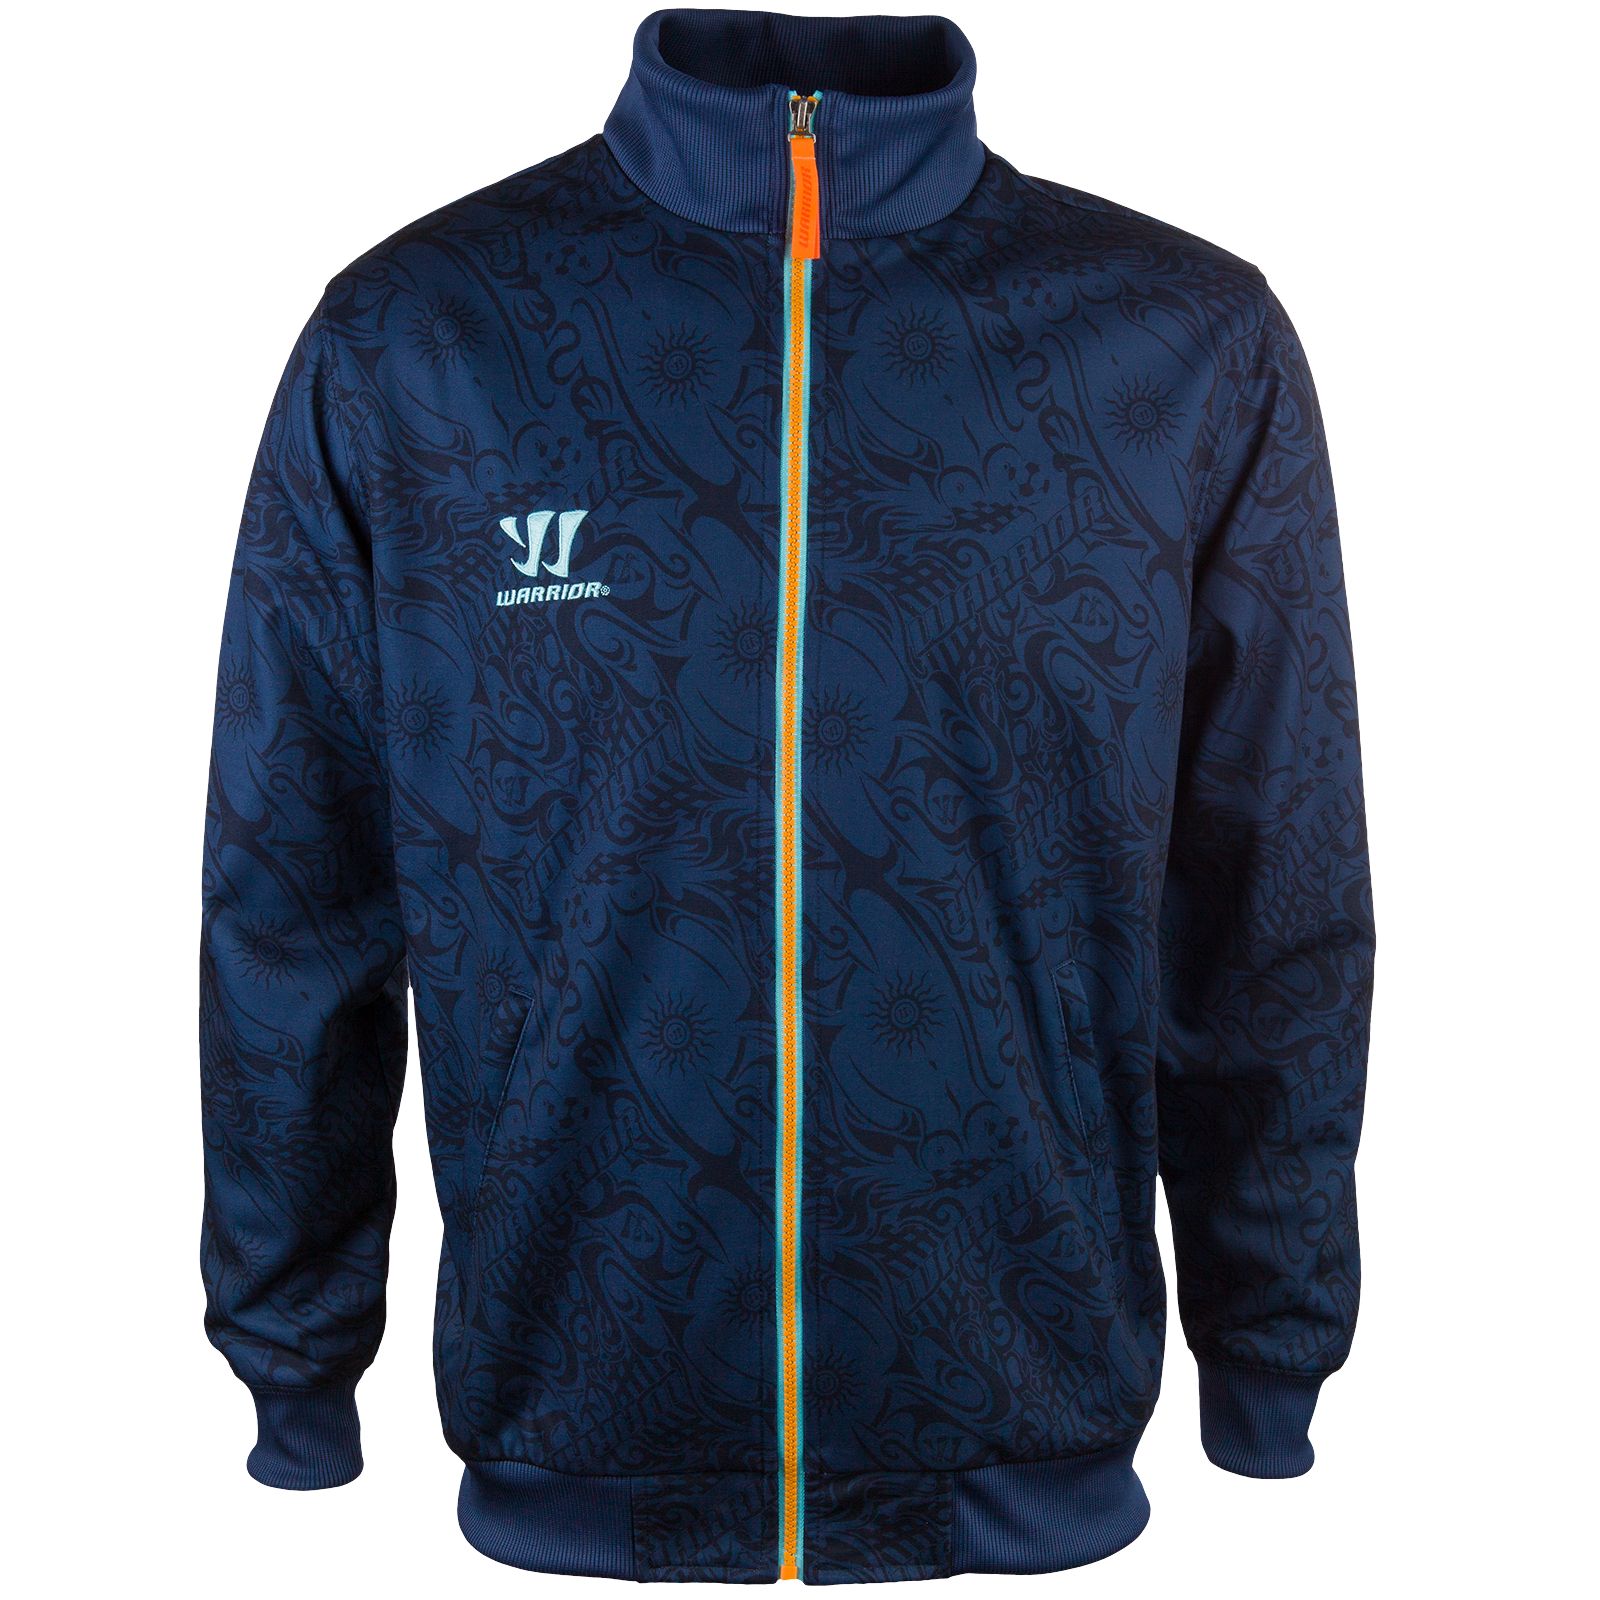 Skreamer Training Track Jacket, Insignia Blue with Blue Radiance & Bright Marigold image number 0